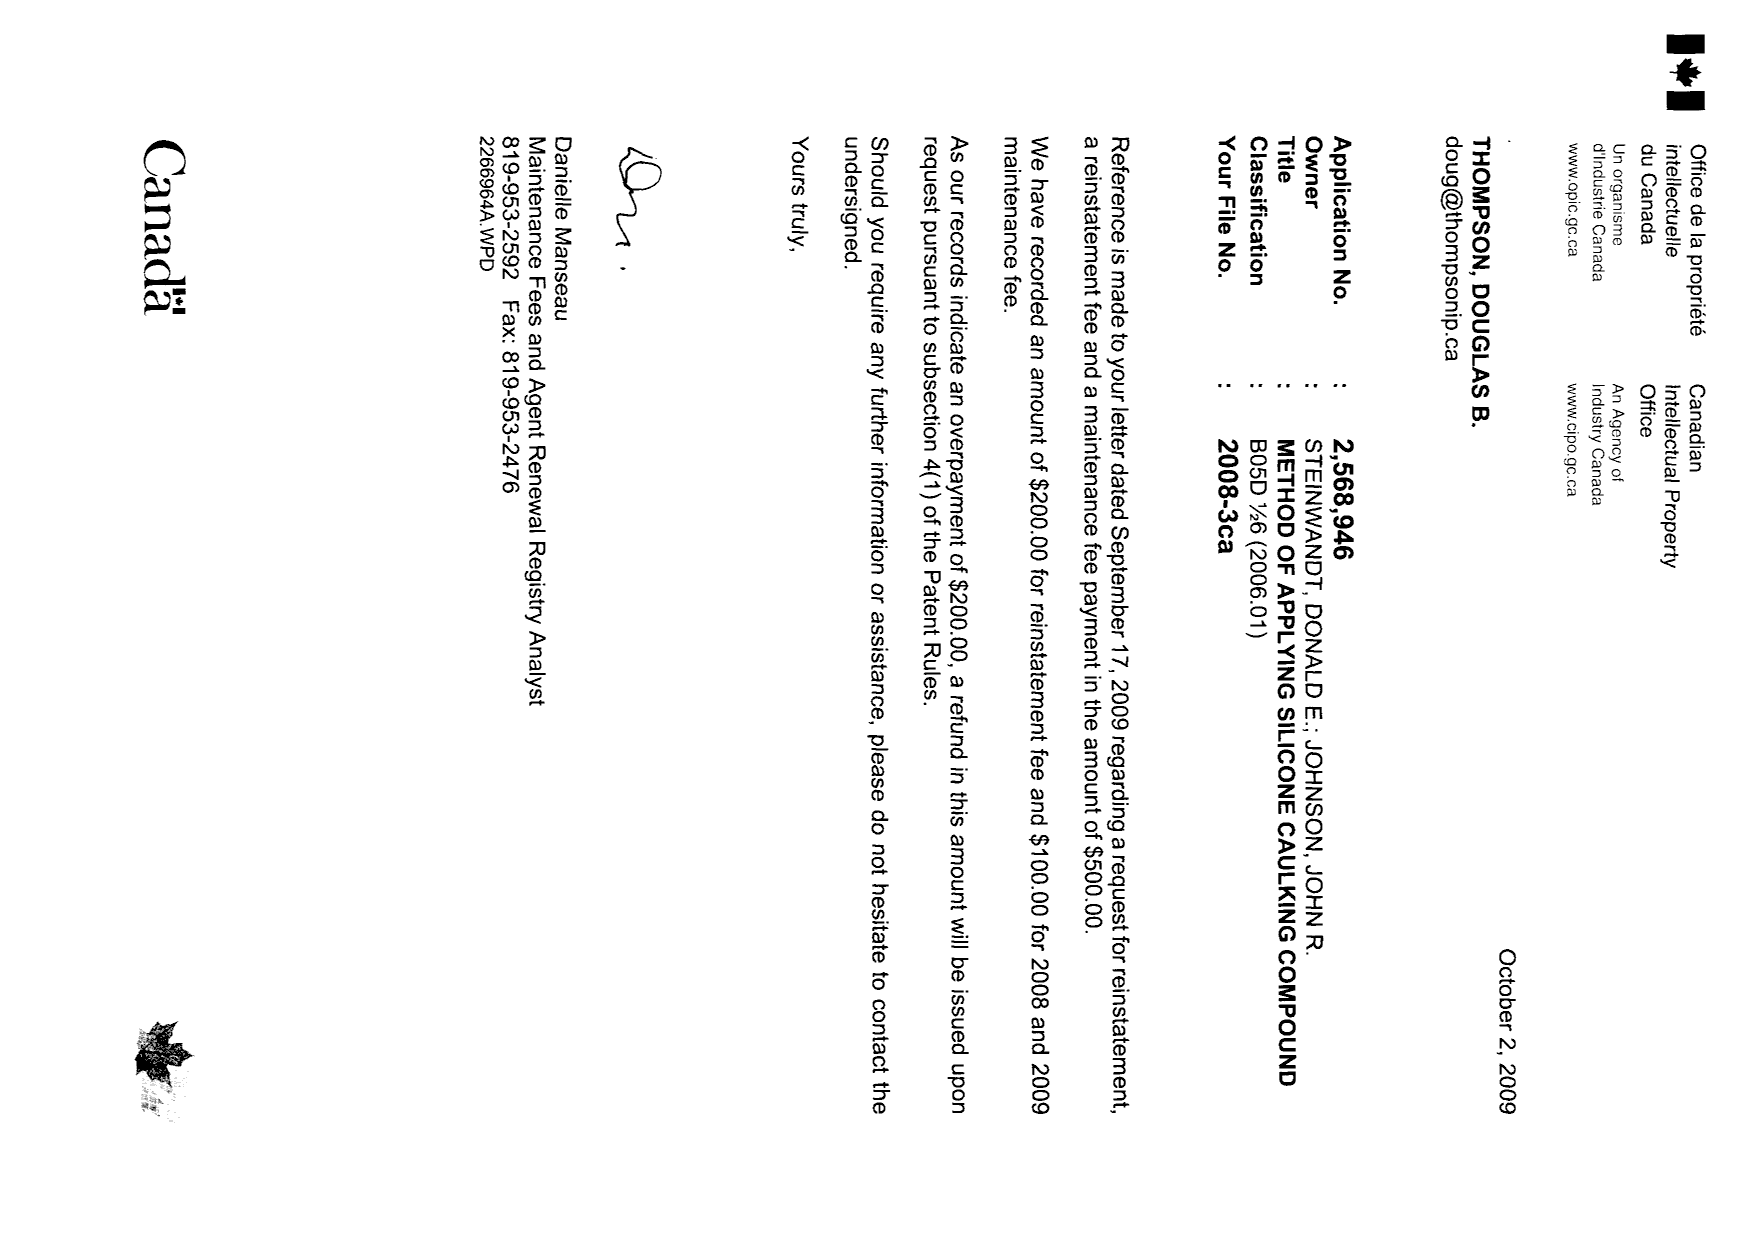 Canadian Patent Document 2568946. Correspondence 20081202. Image 1 of 1